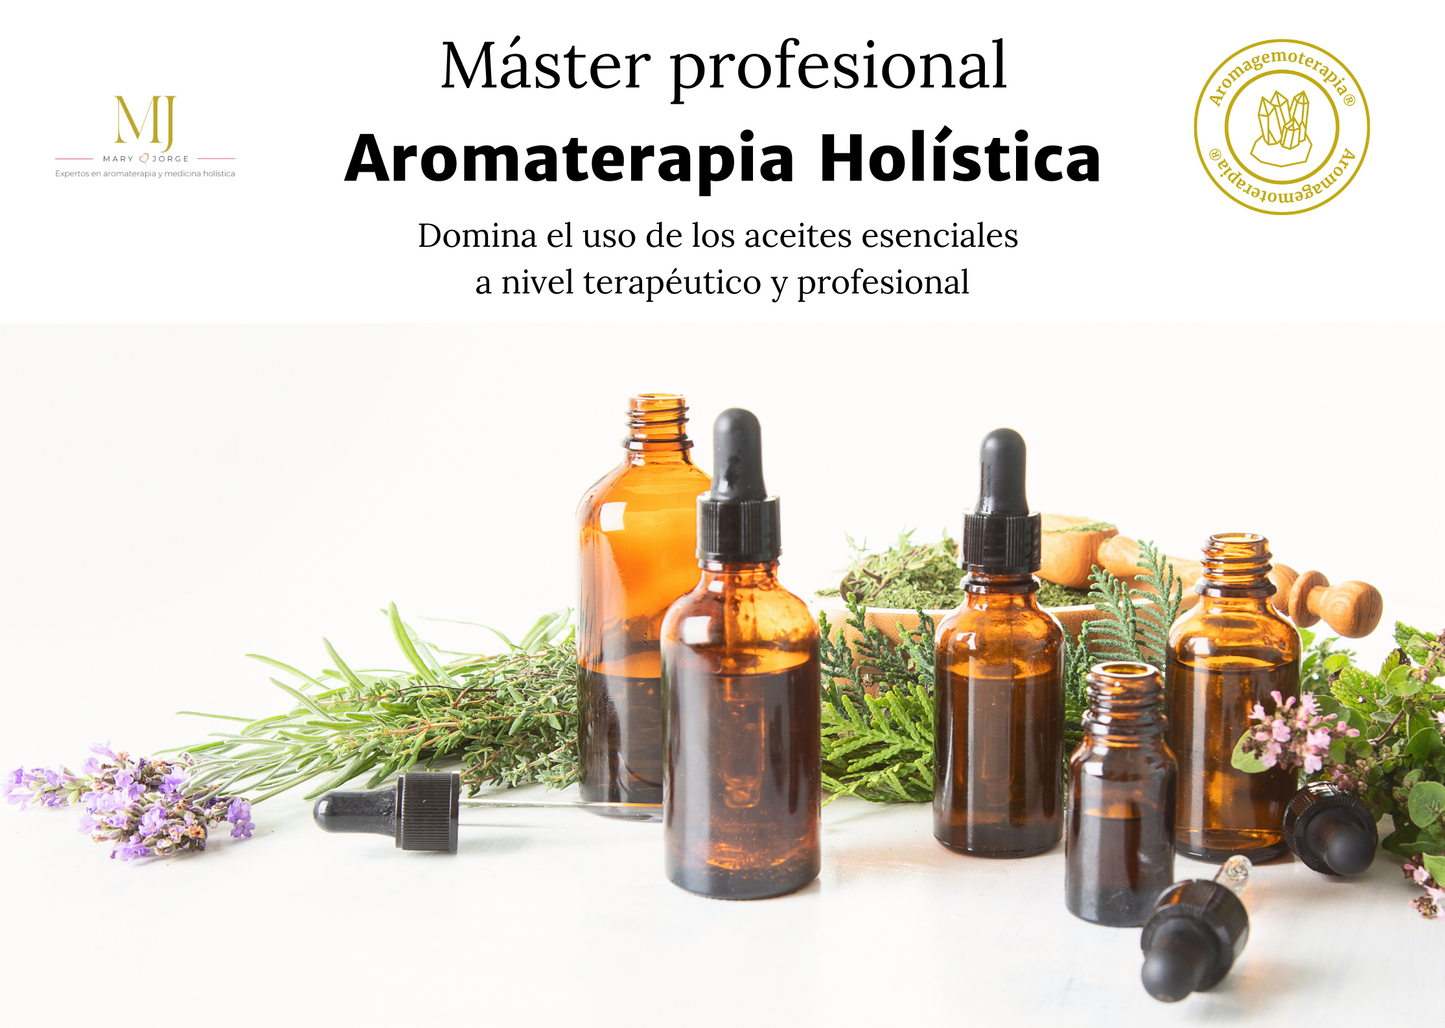 Formación especializada en aromaterapia Holística